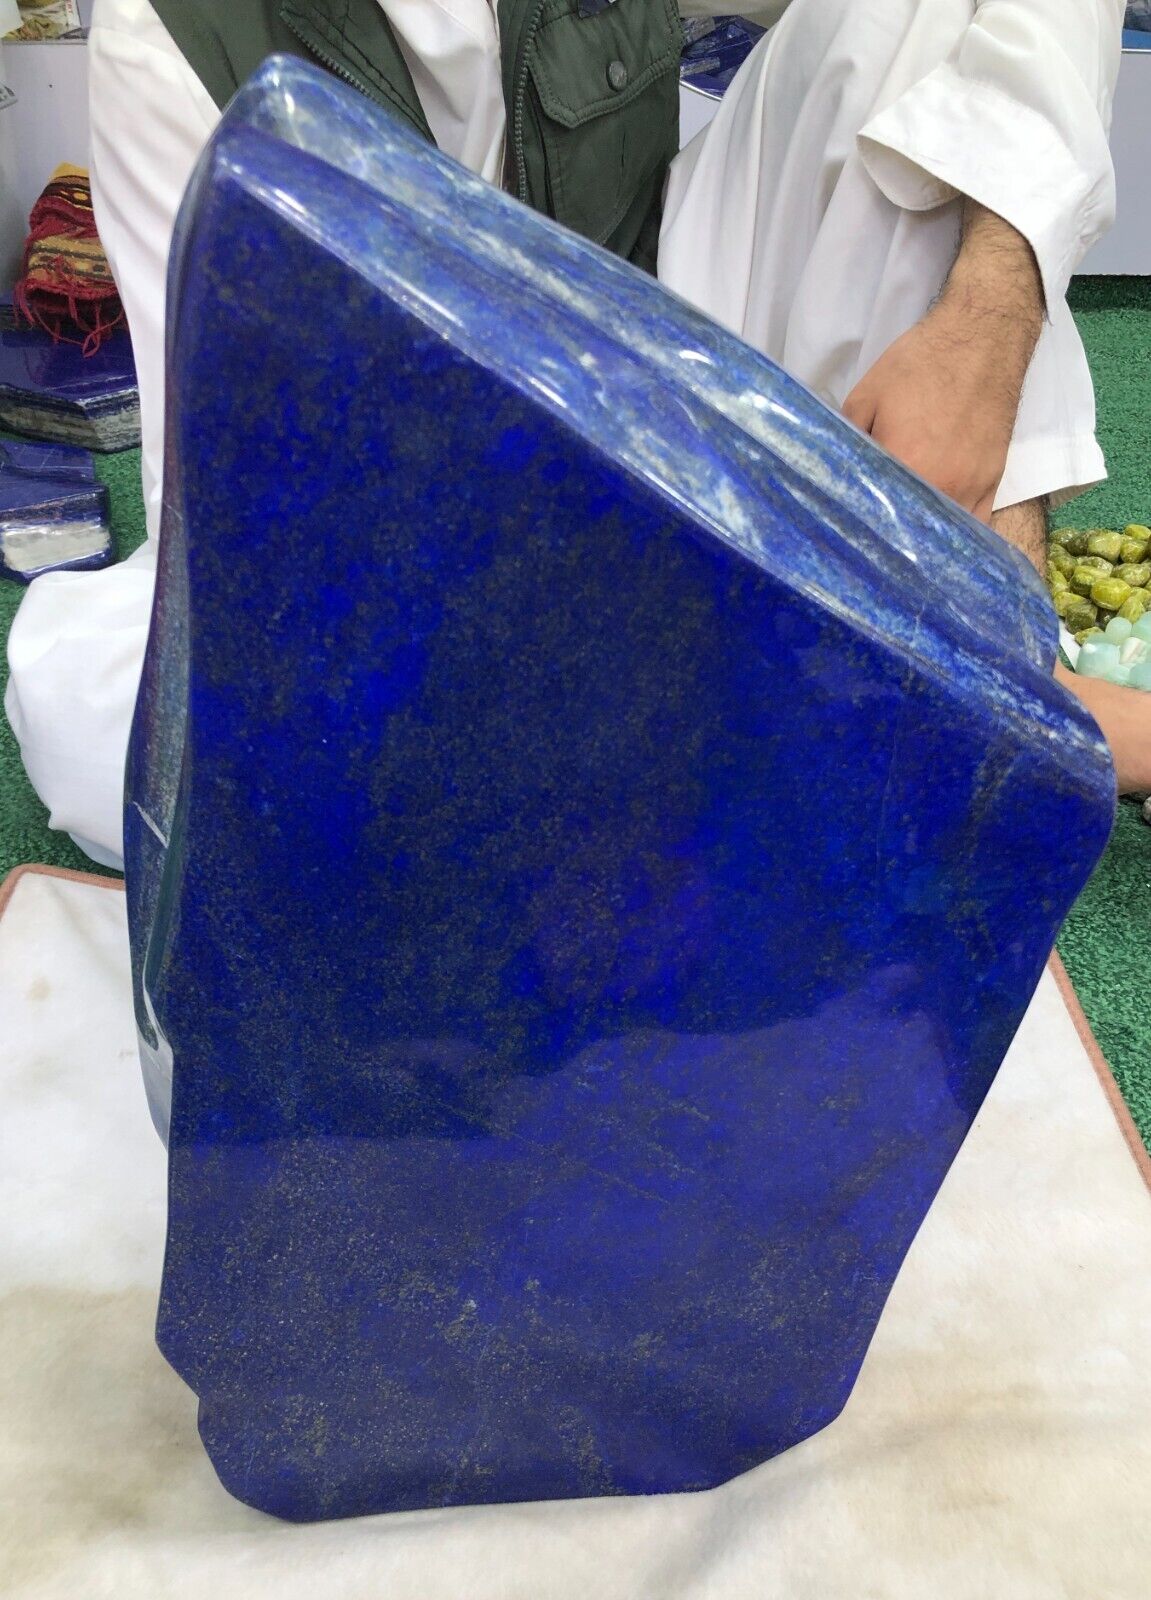 33-KG Beautiful A+++ Lapis Lazuli Polished Freeform Tumbled Stone, Display Stone